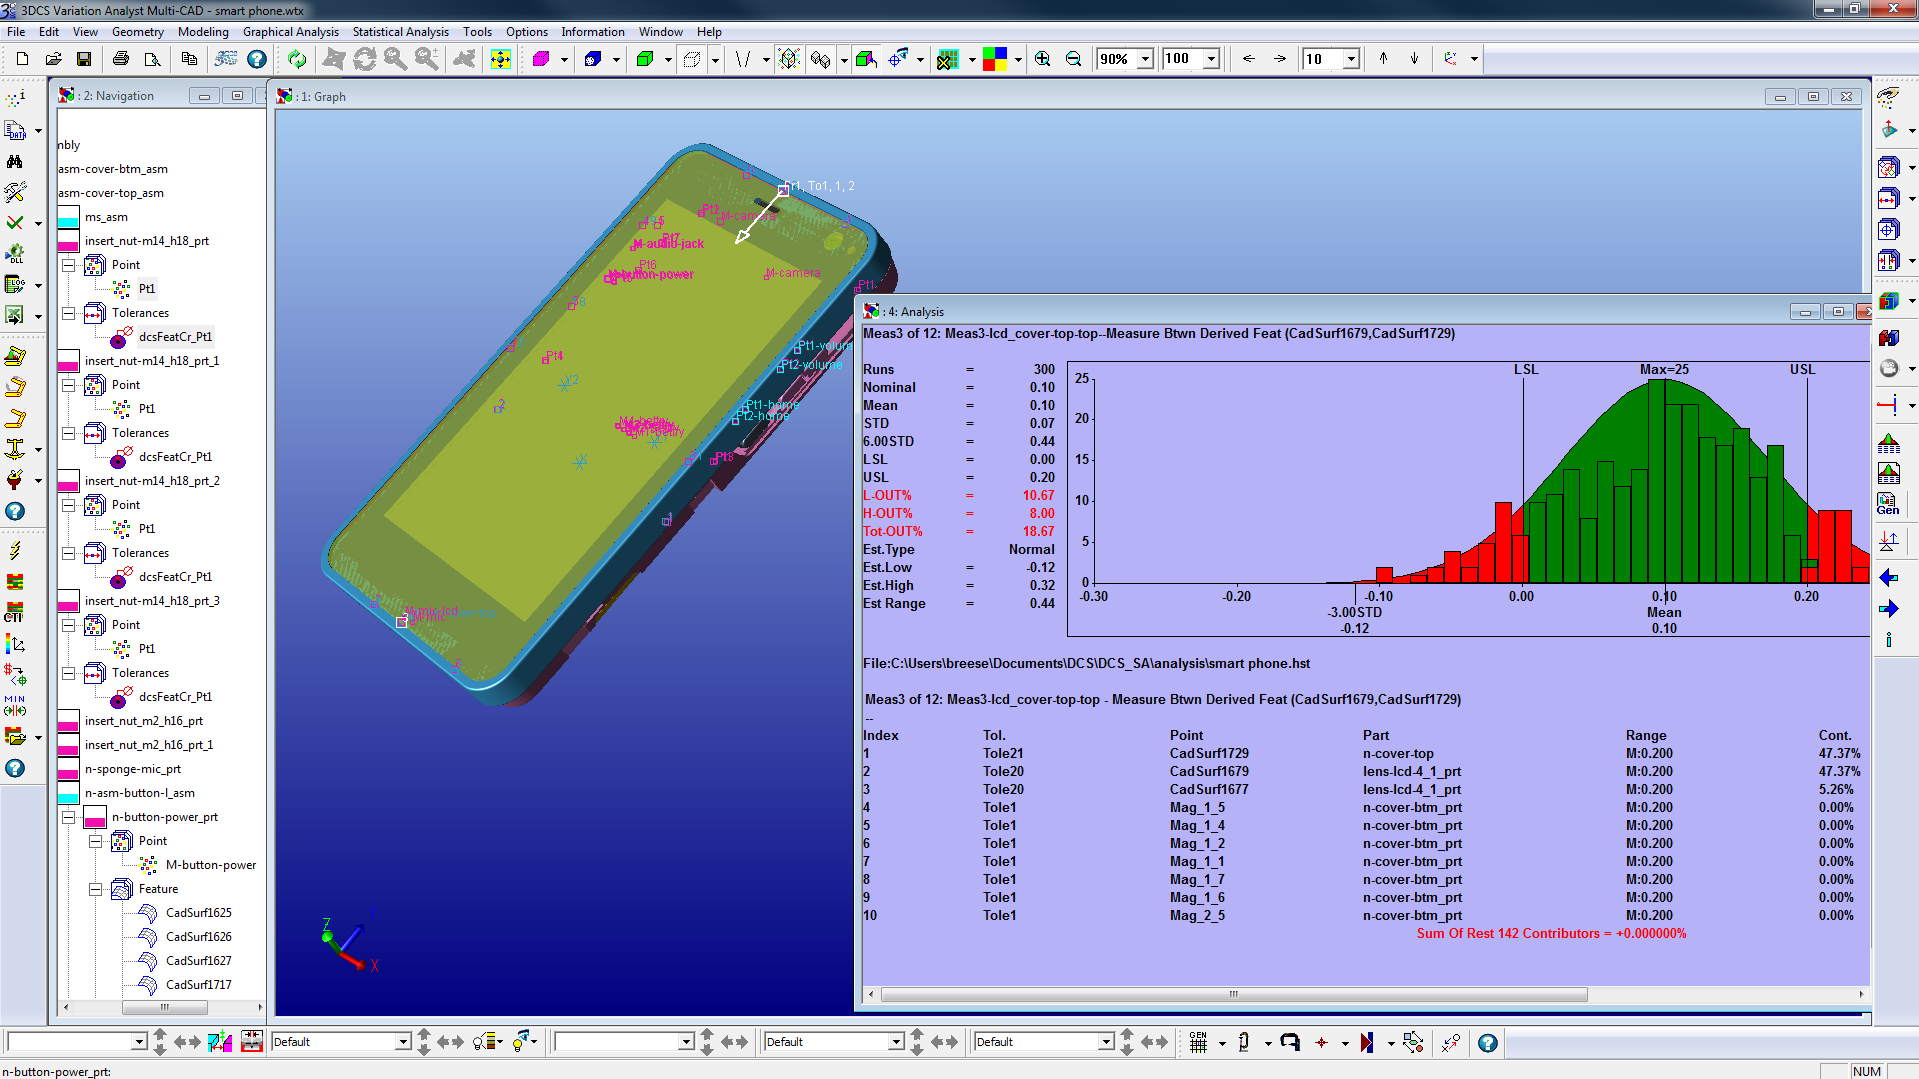 analysis of 3DCS measurement